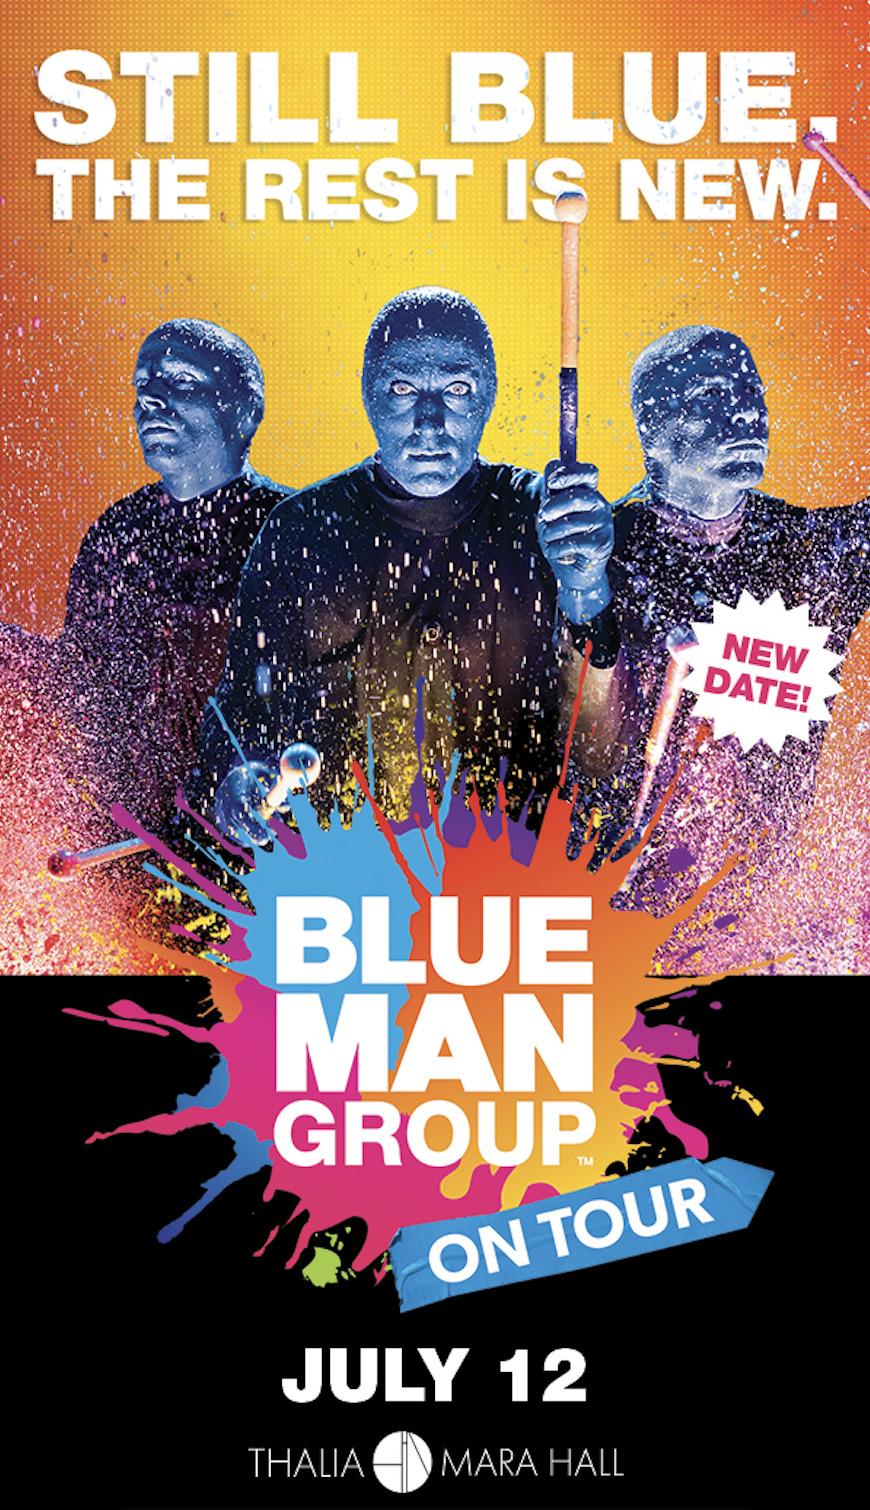 Blue Man Group on Tour!